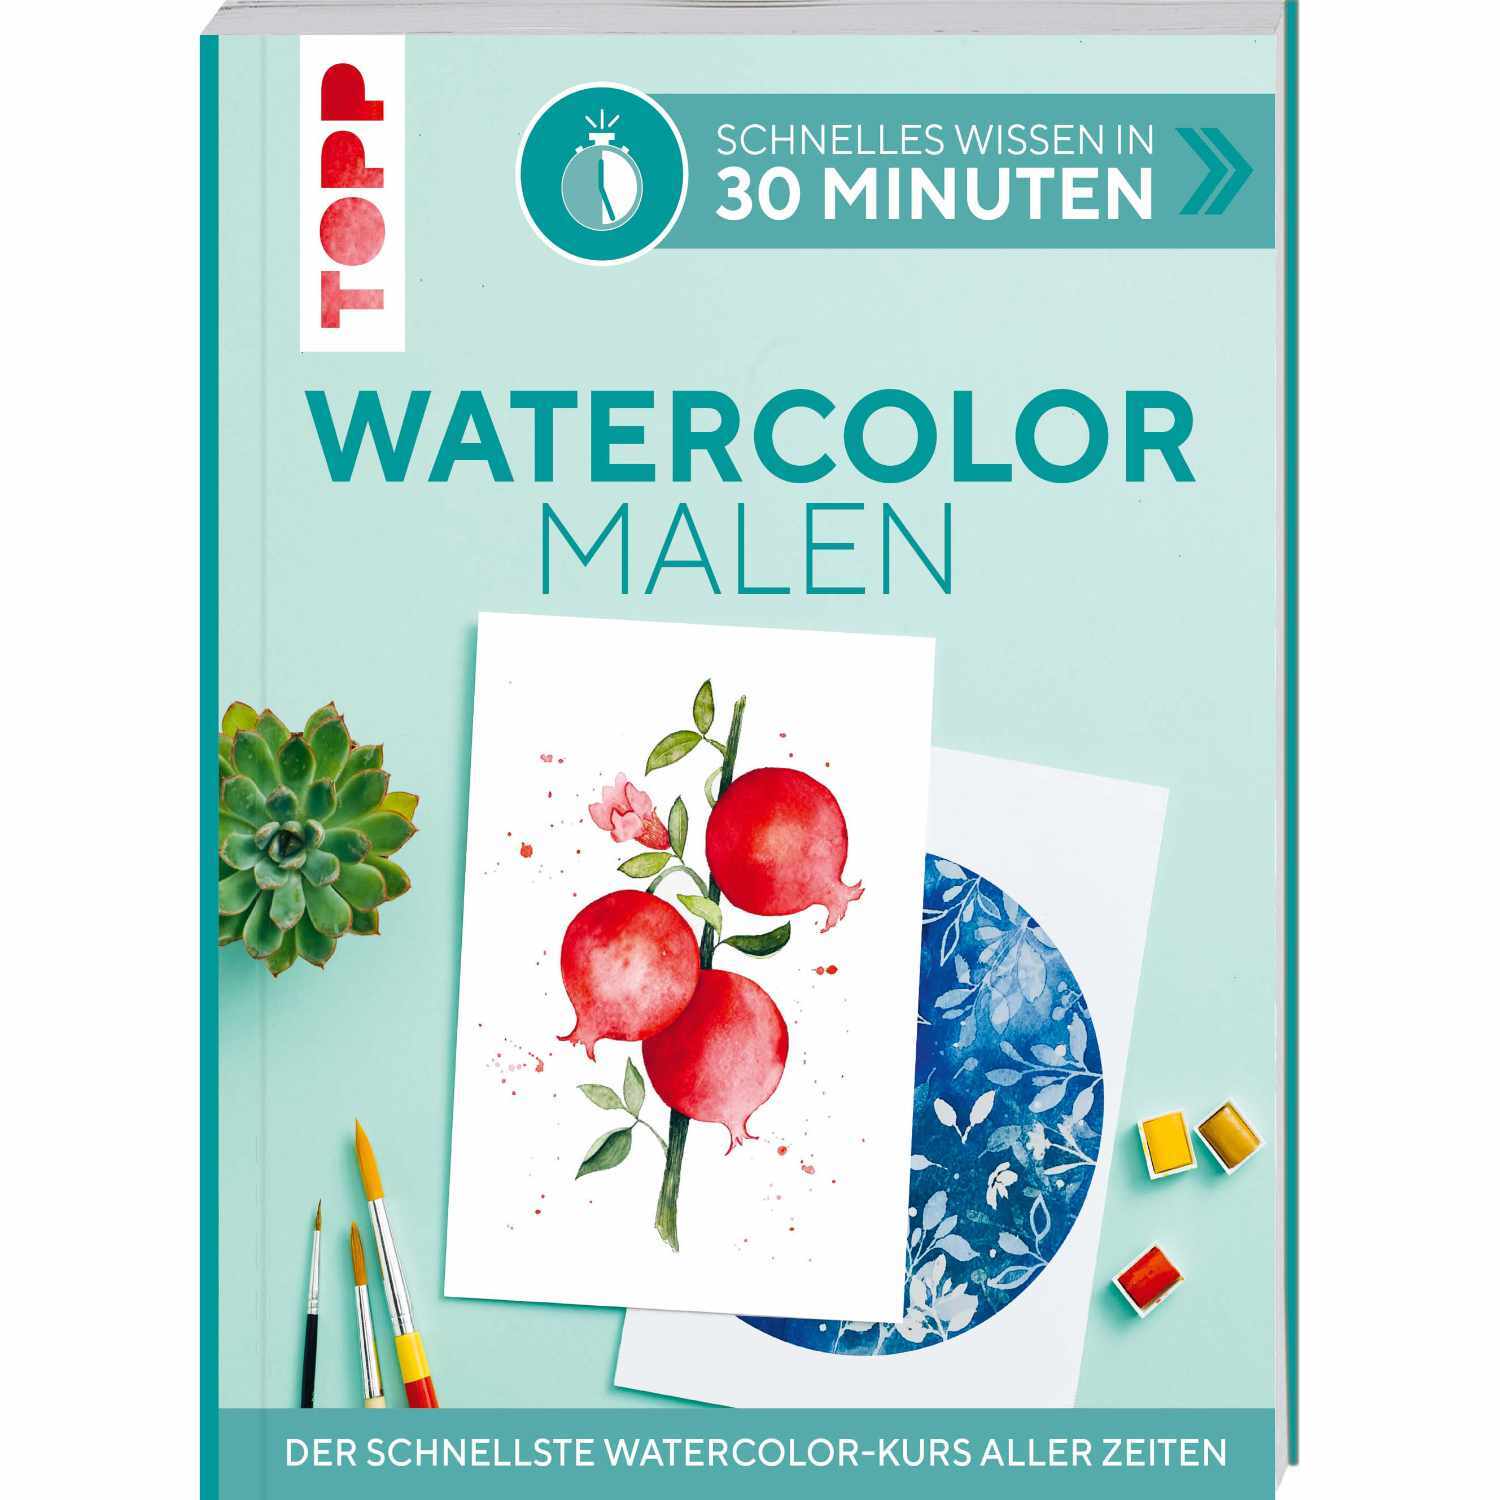 Watercolor malen - Schnelles Wissen in 30 Minuten